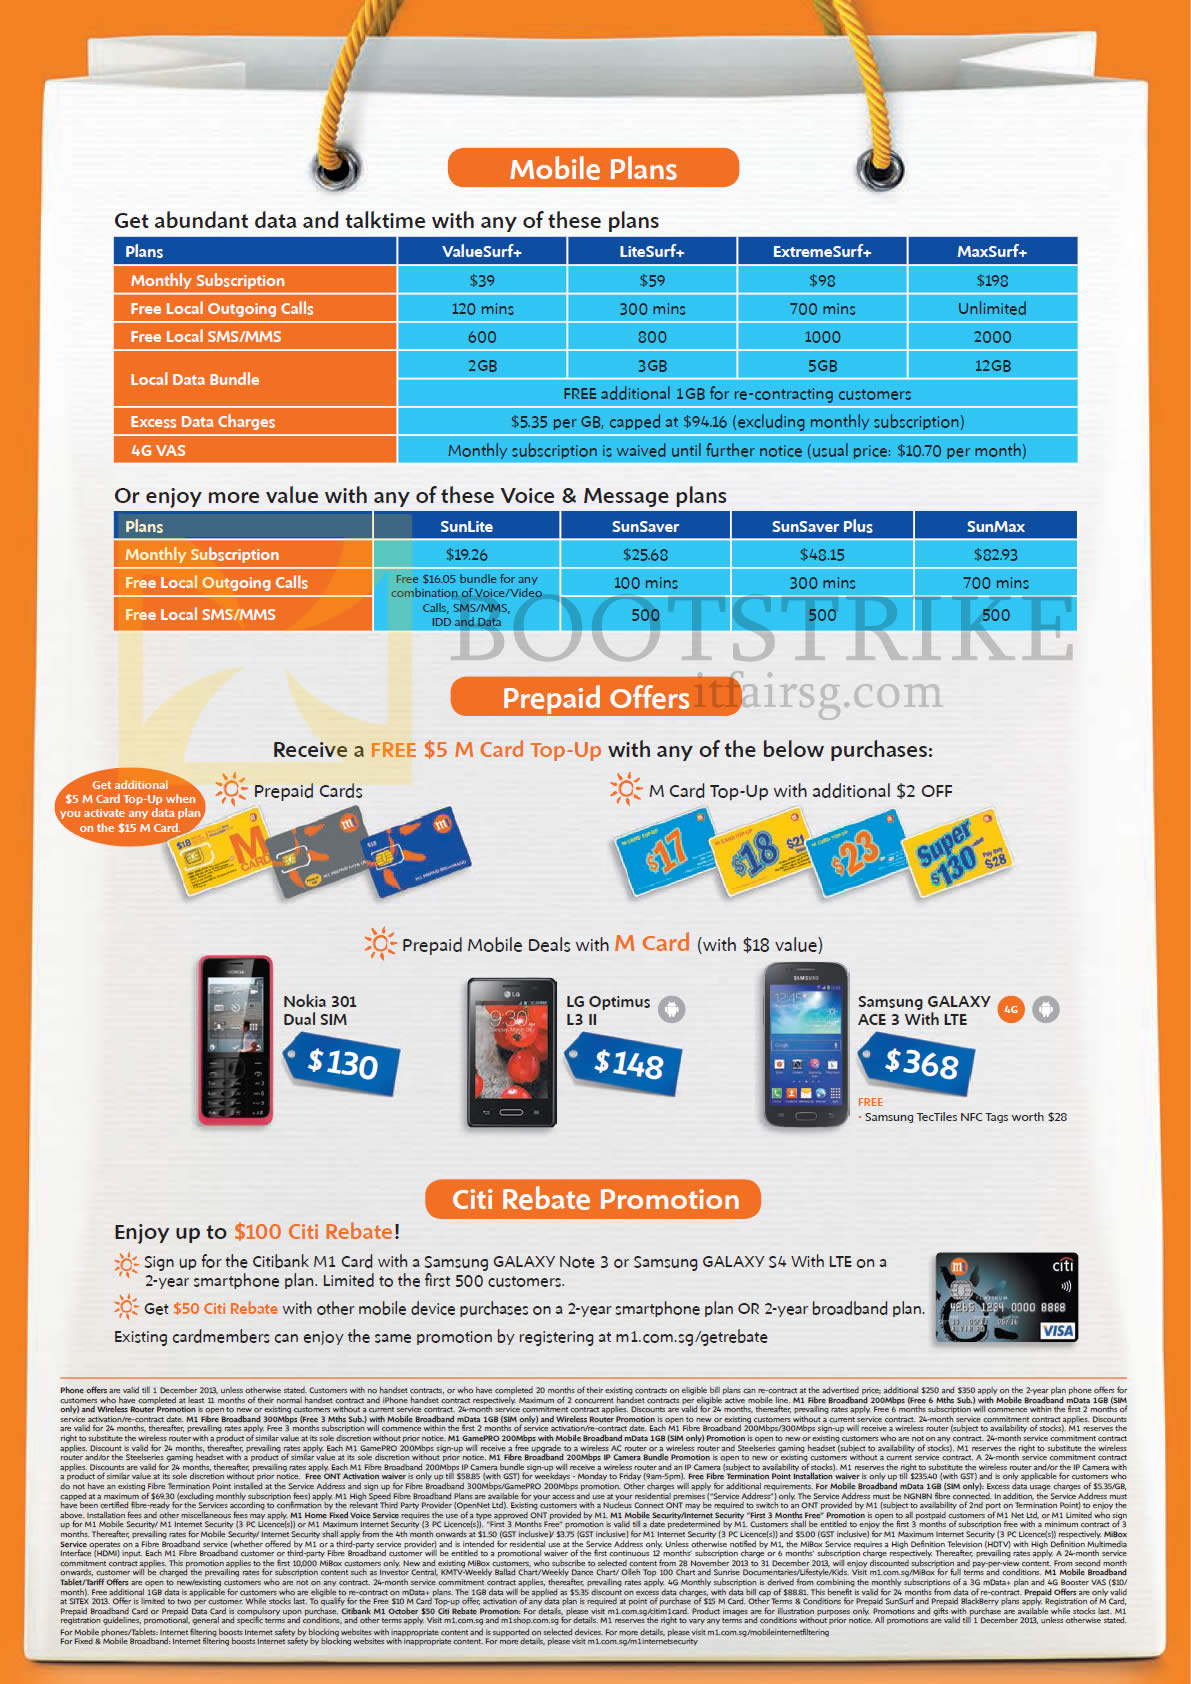 SITEX 2013 price list image brochure of M1 Mobile Plans, M Card Prepaid Top Up, Citibank Rebate, Nokia 301, LG Optimus L3 II, Samsung Galaxy Ace 3